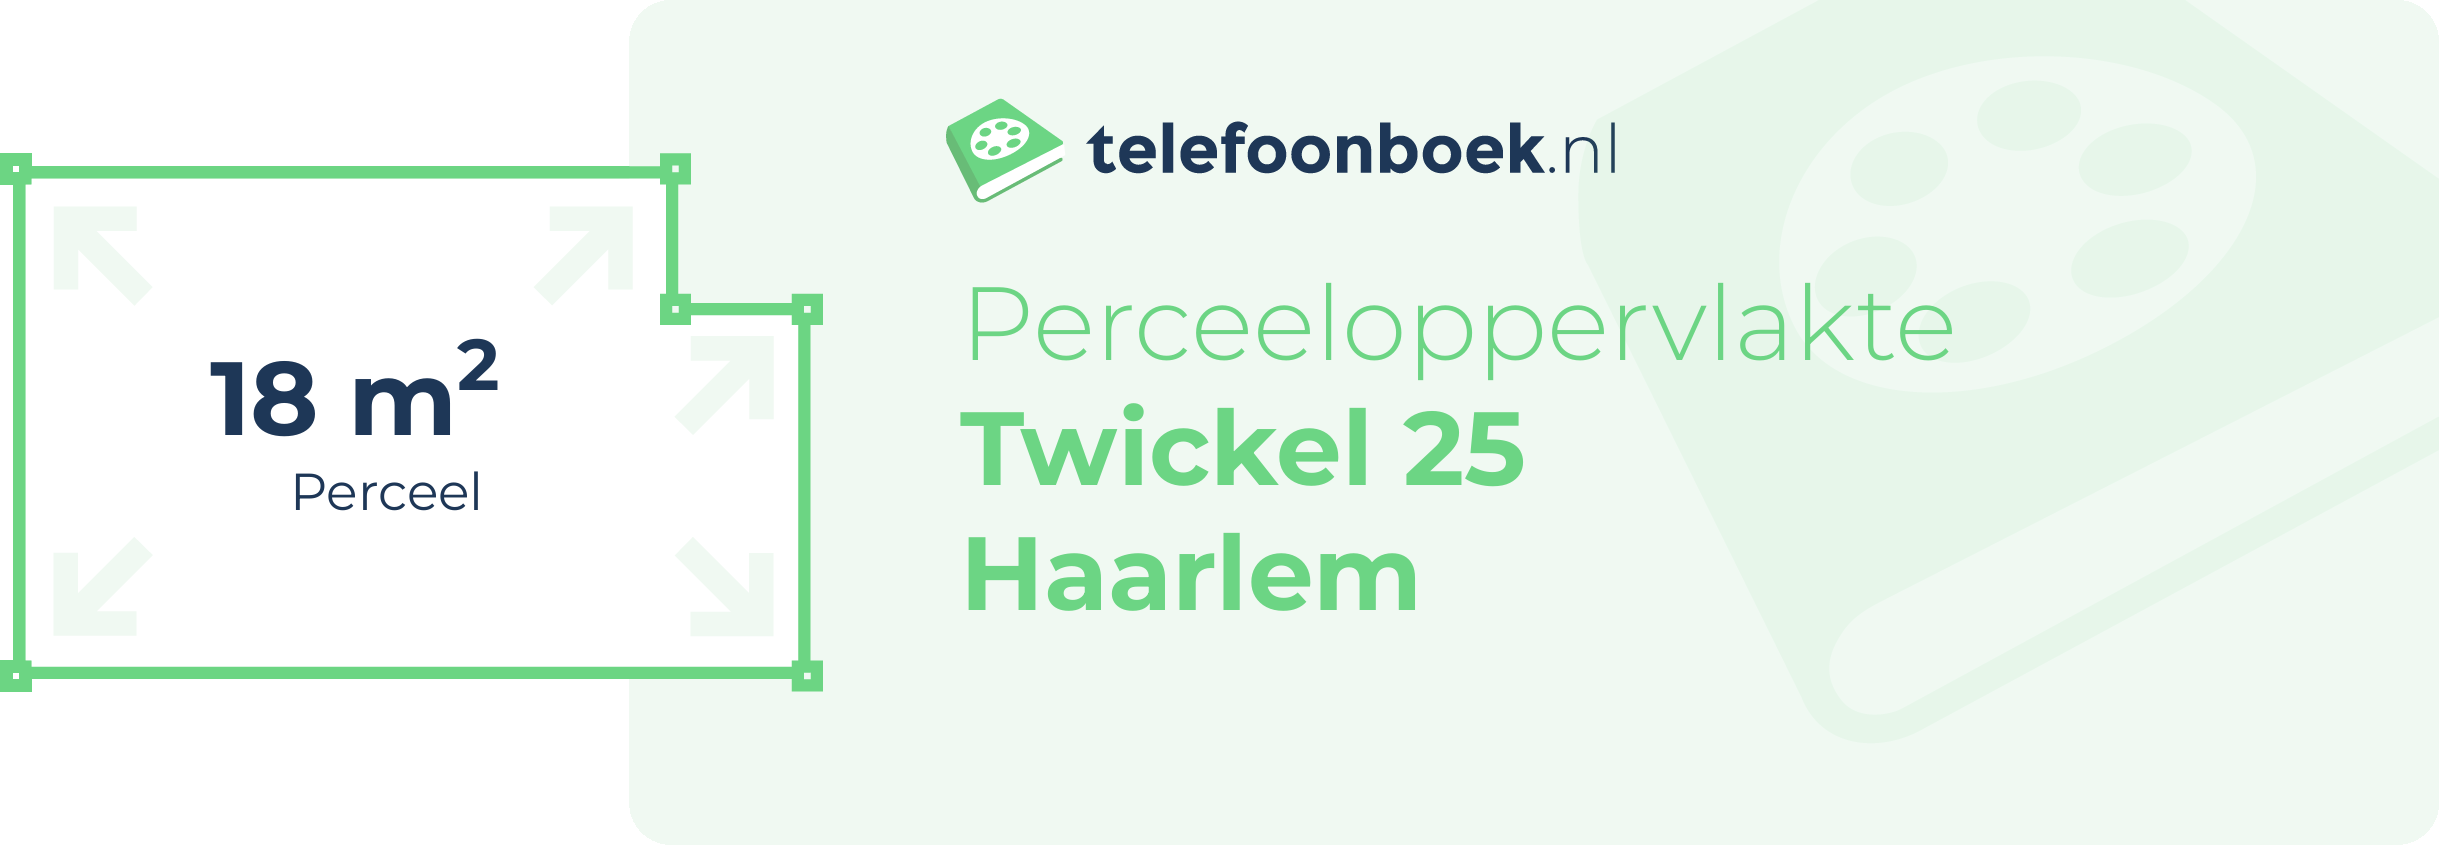 Perceeloppervlakte Twickel 25 Haarlem